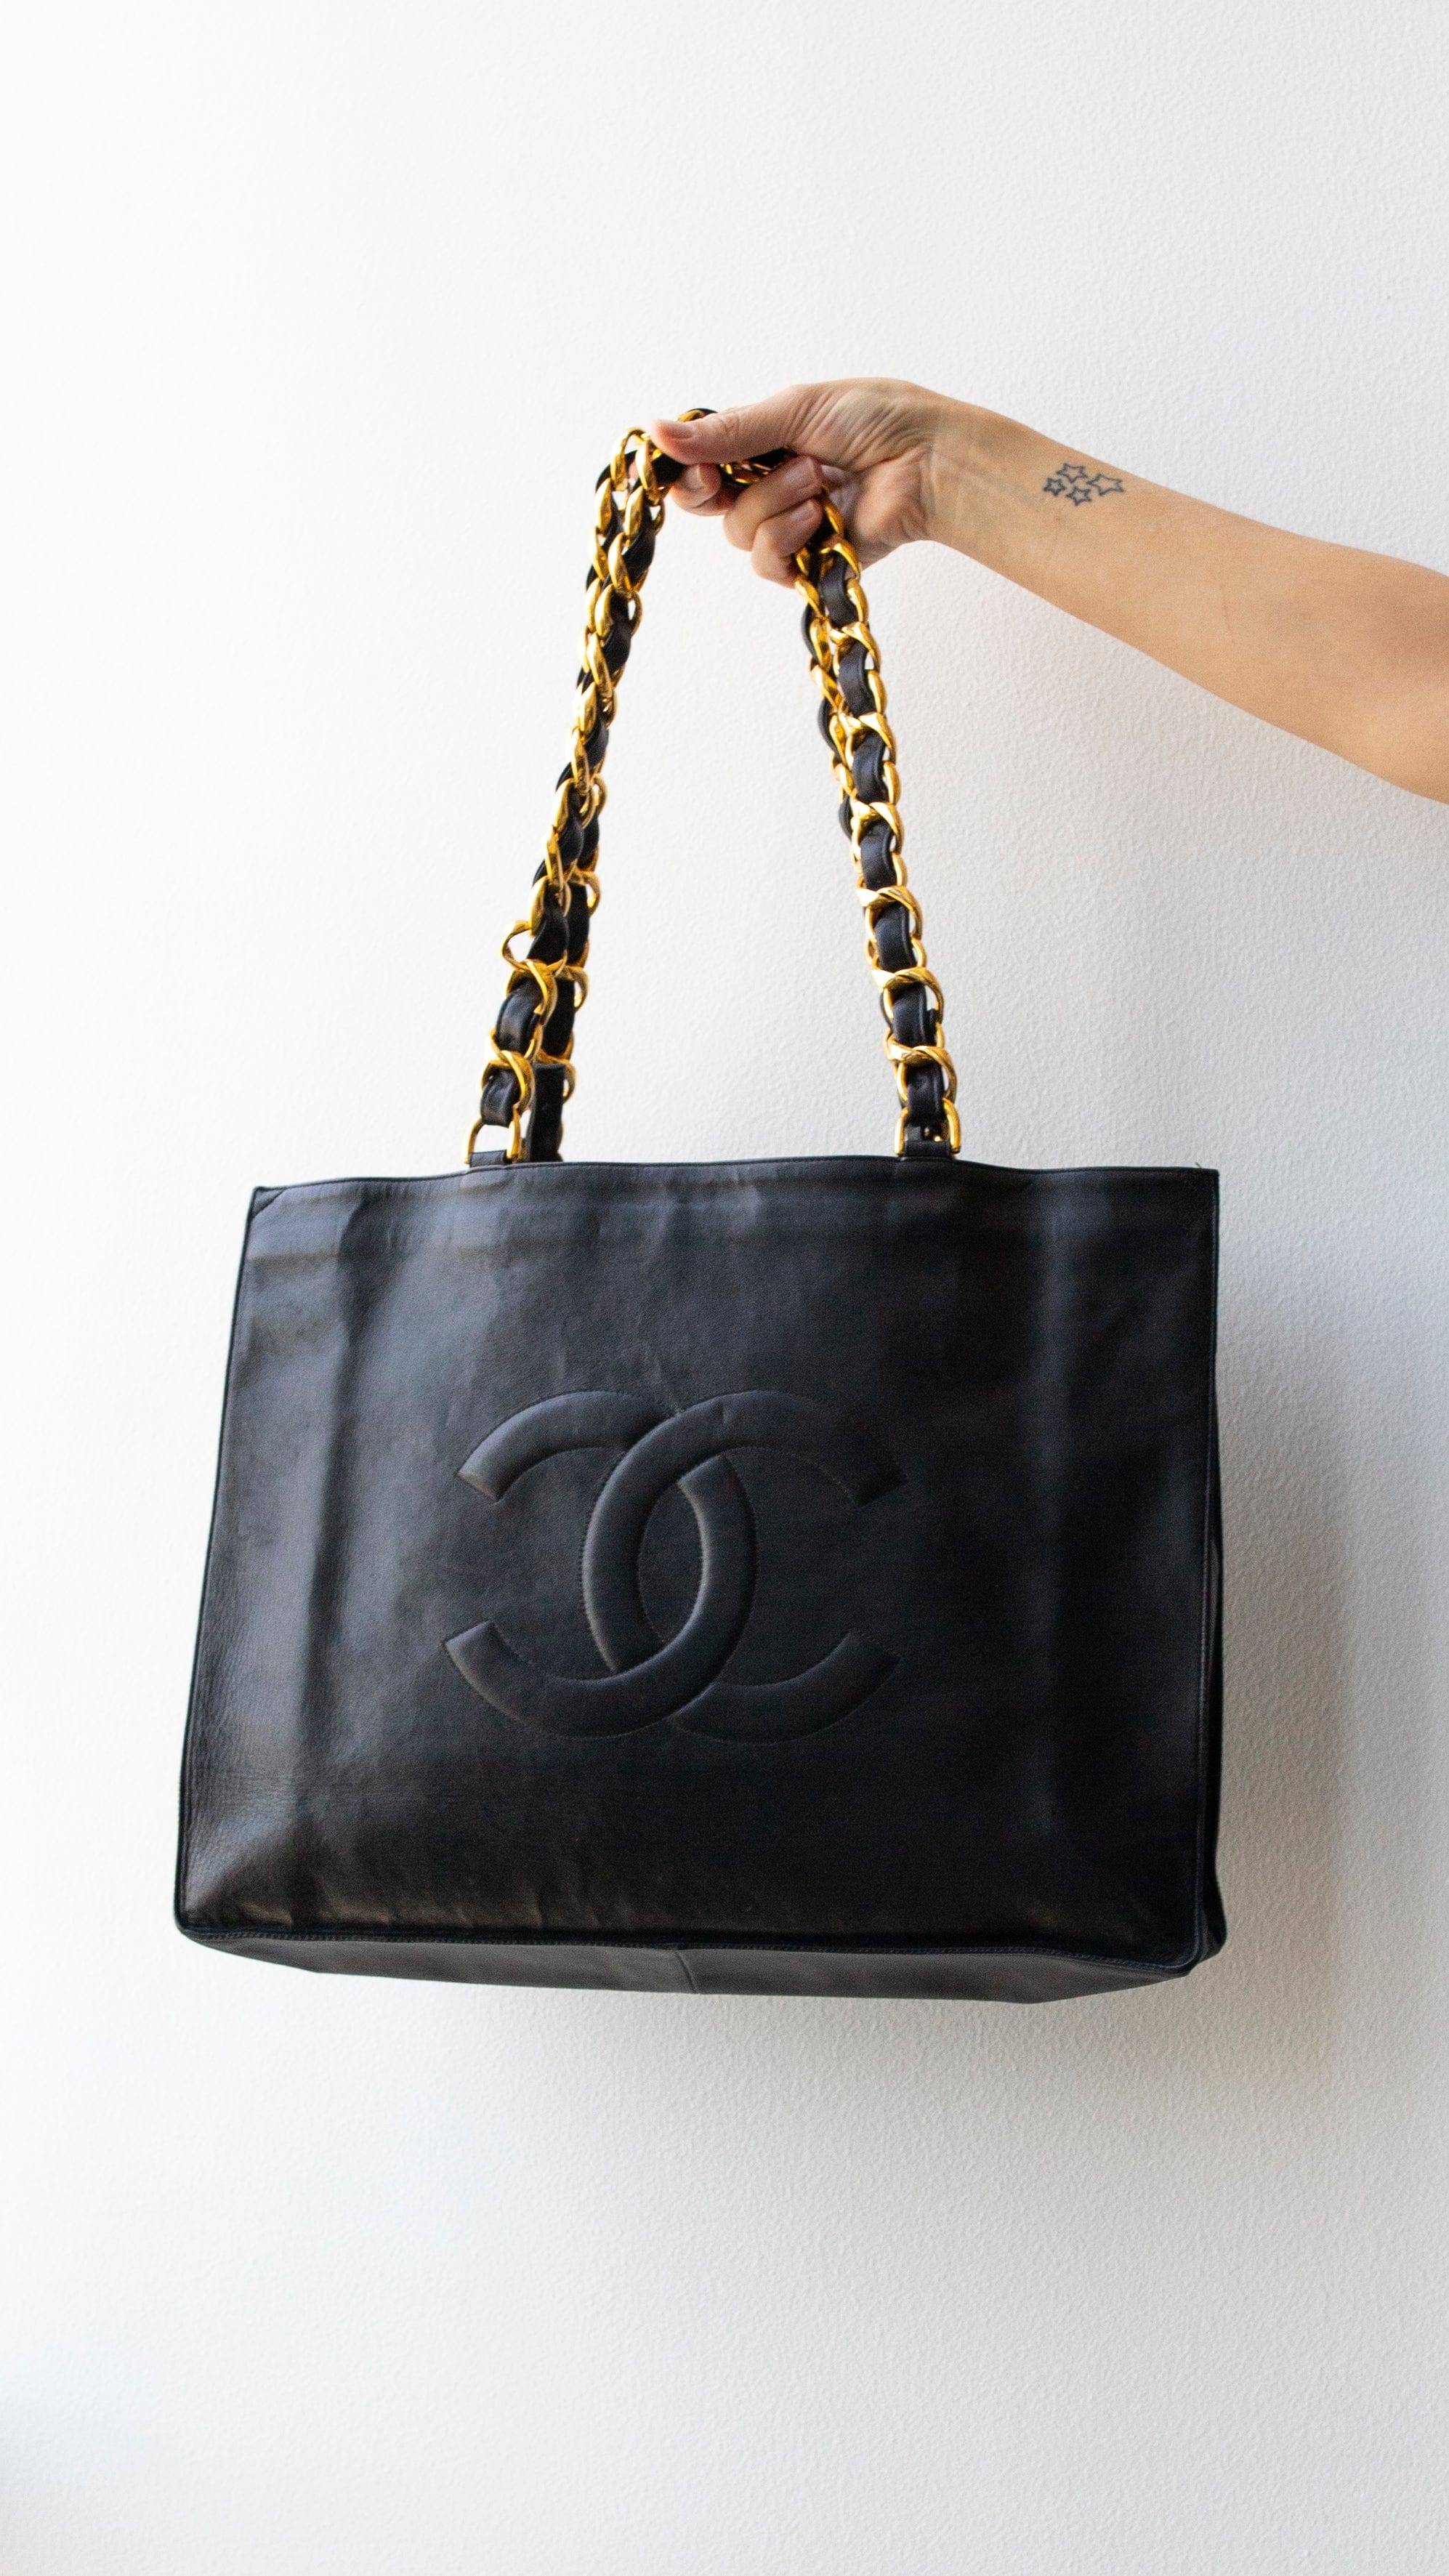 Chanel Bullskin Shopping Tote - Totes, Handbags